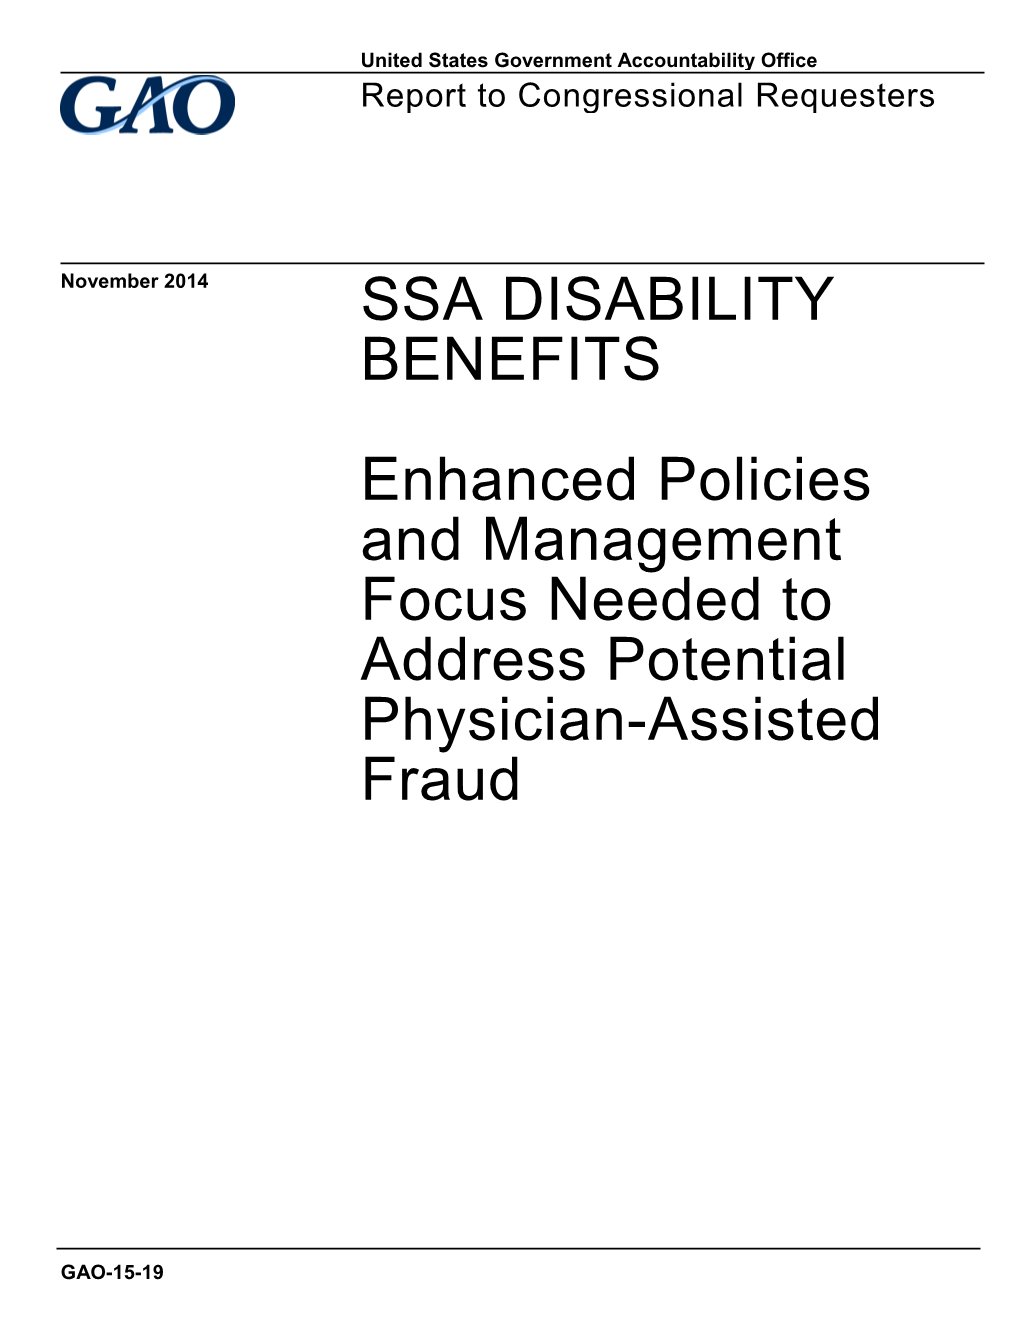 GAO-15-19, SSA Disability Benefits